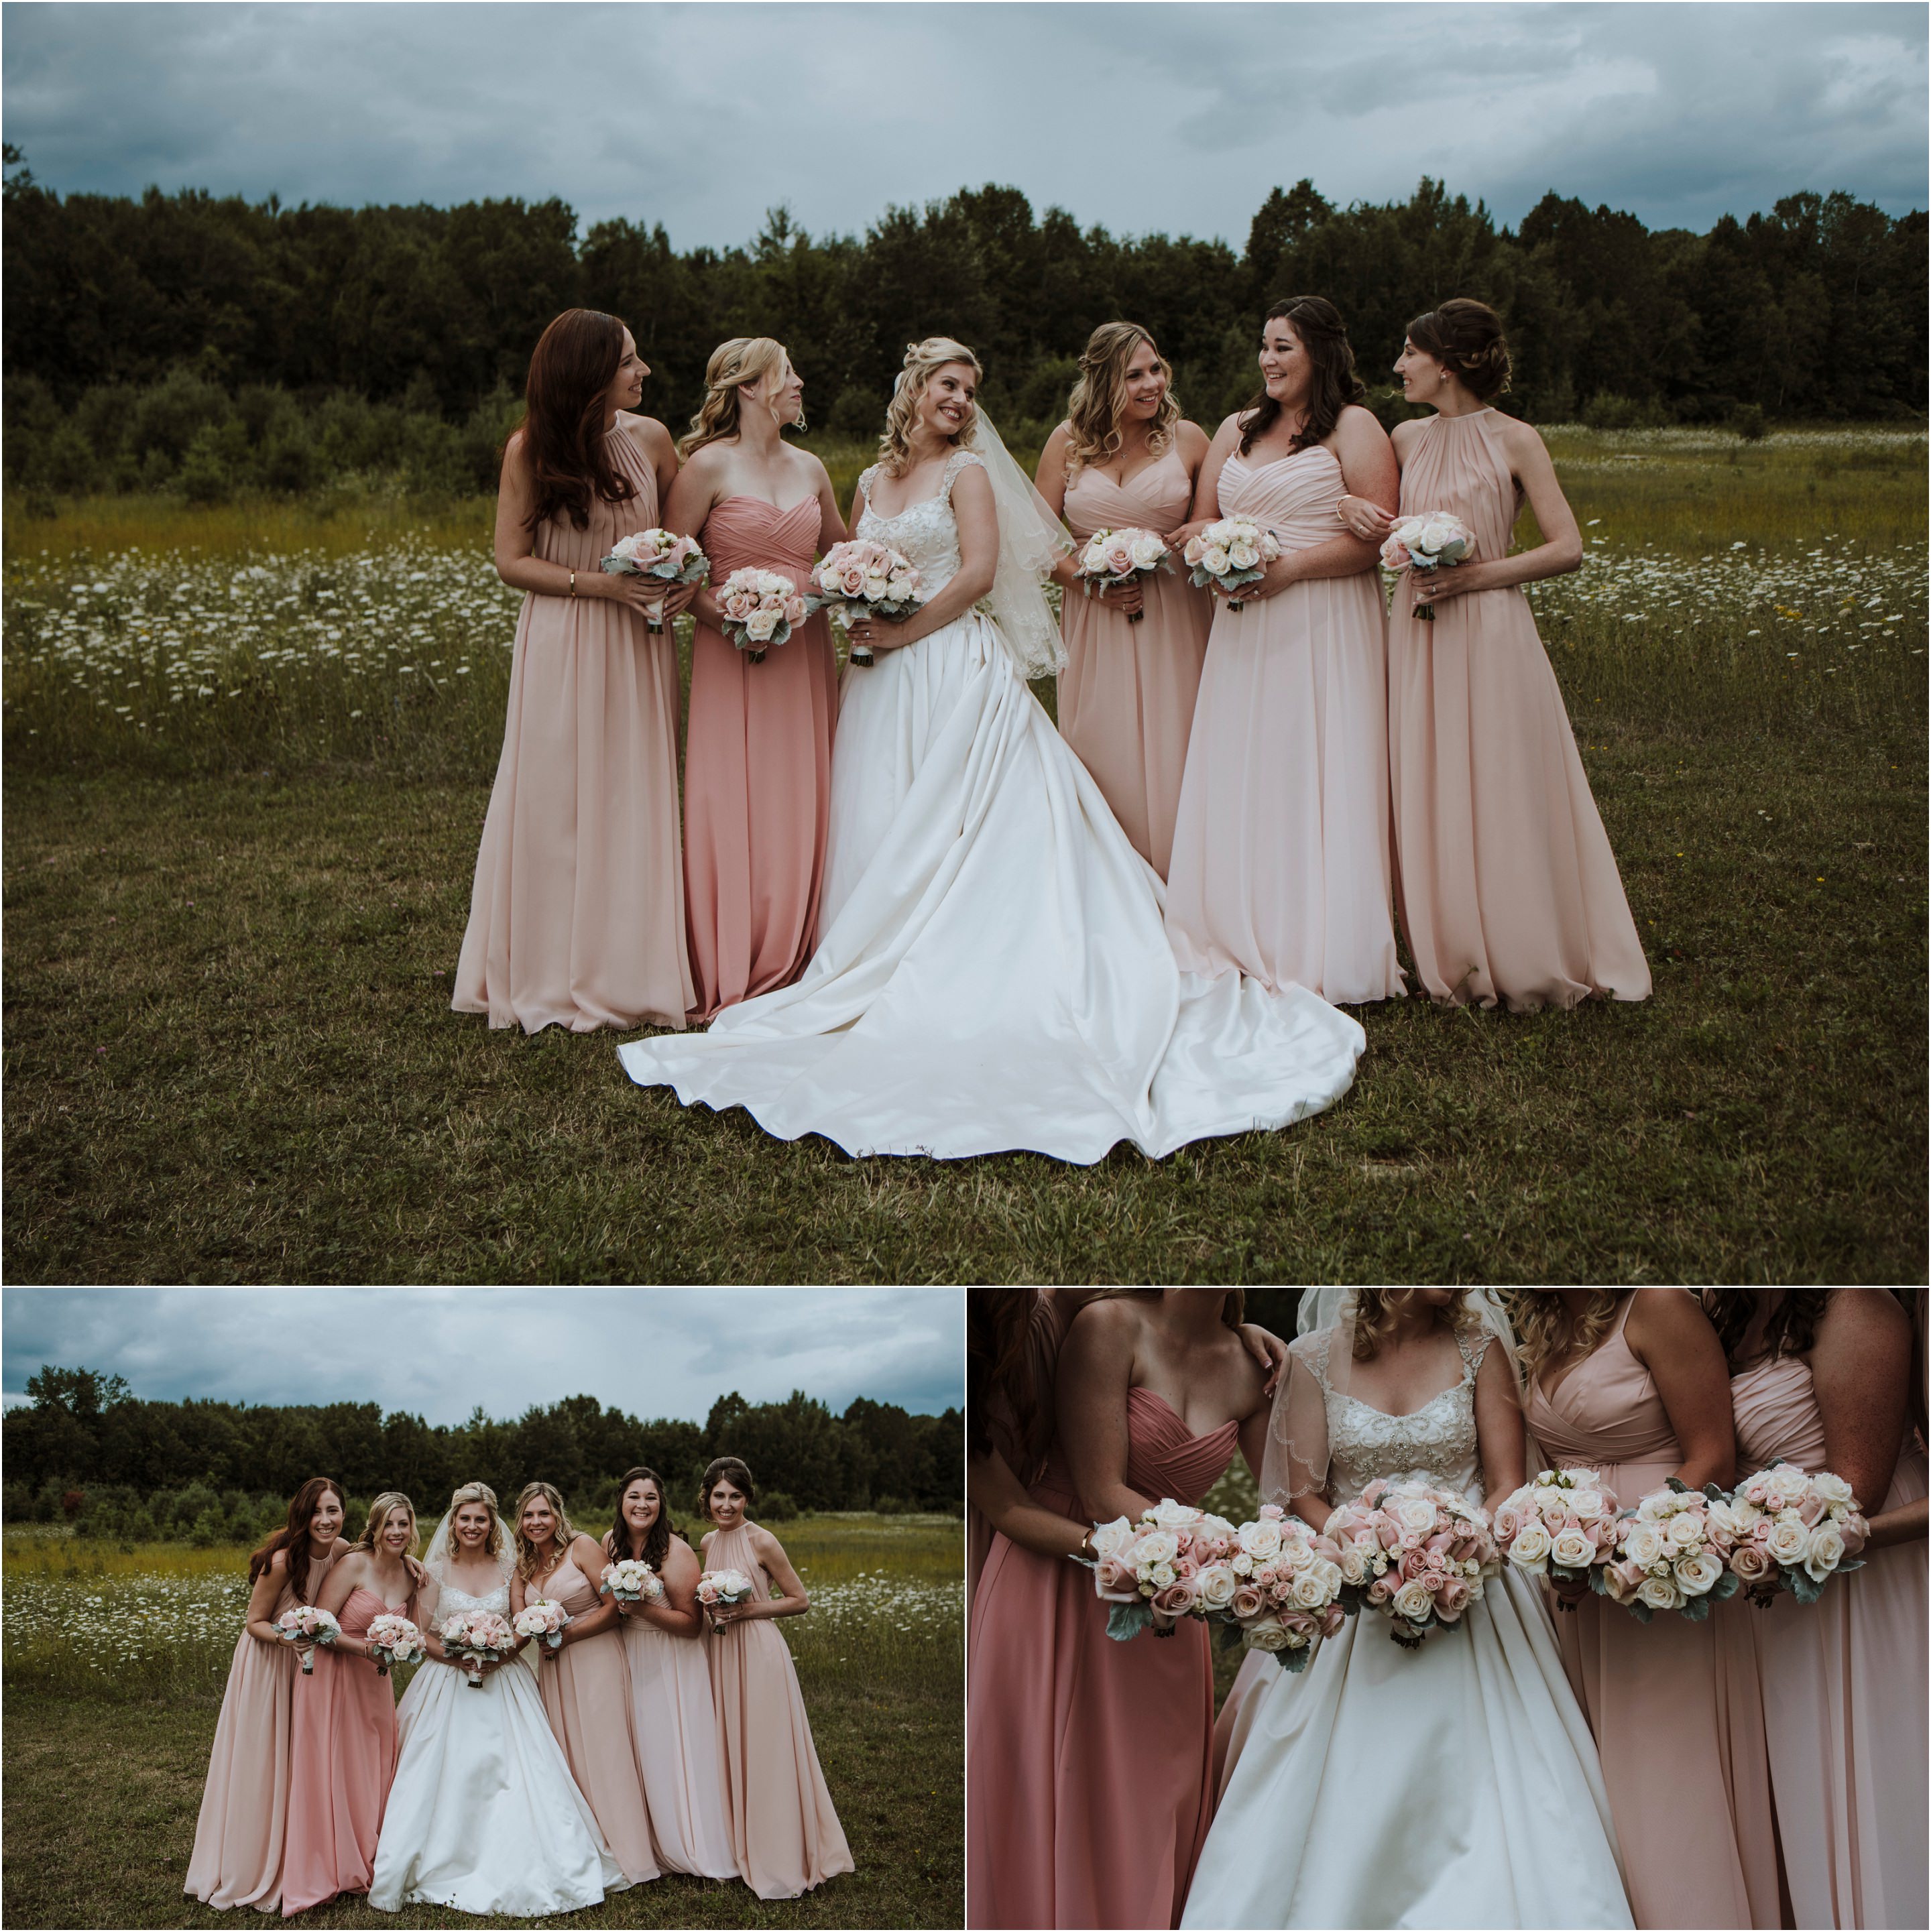 Ottawa Valley Wedding - Cindy Lottes Photography